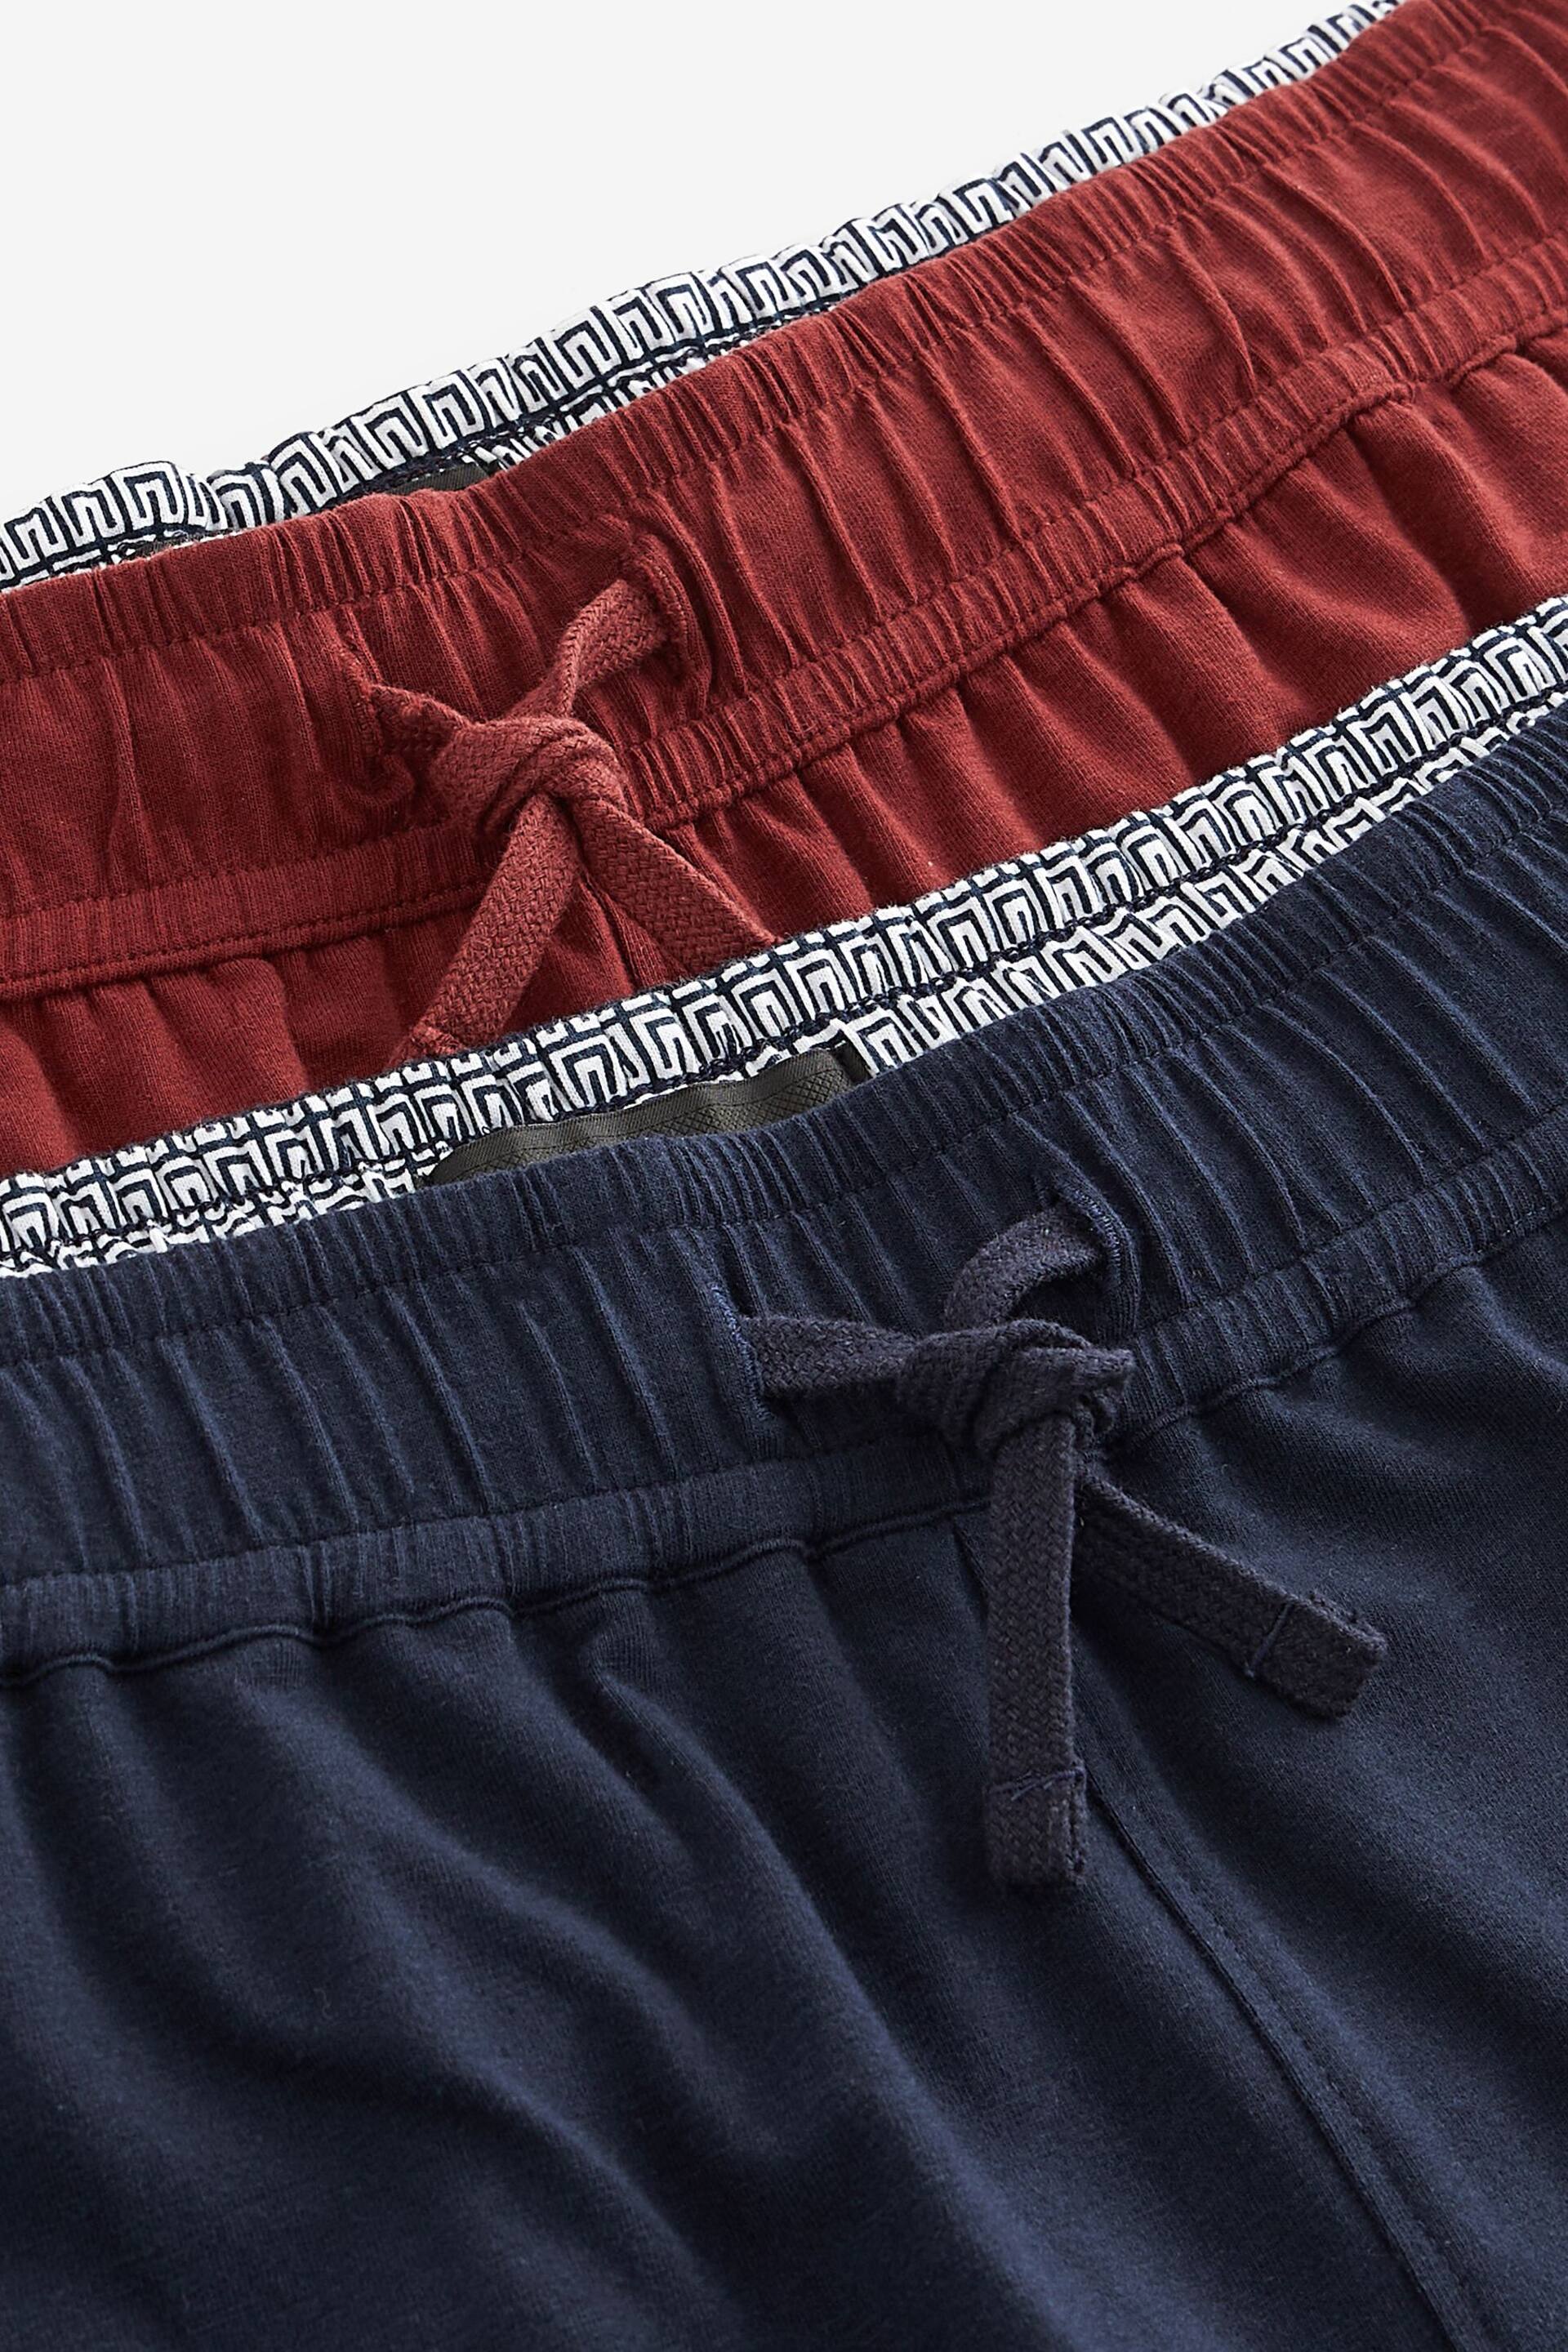 Navy Blue/Orange Modal Lightweight Shorts 2 Pack - Image 13 of 15